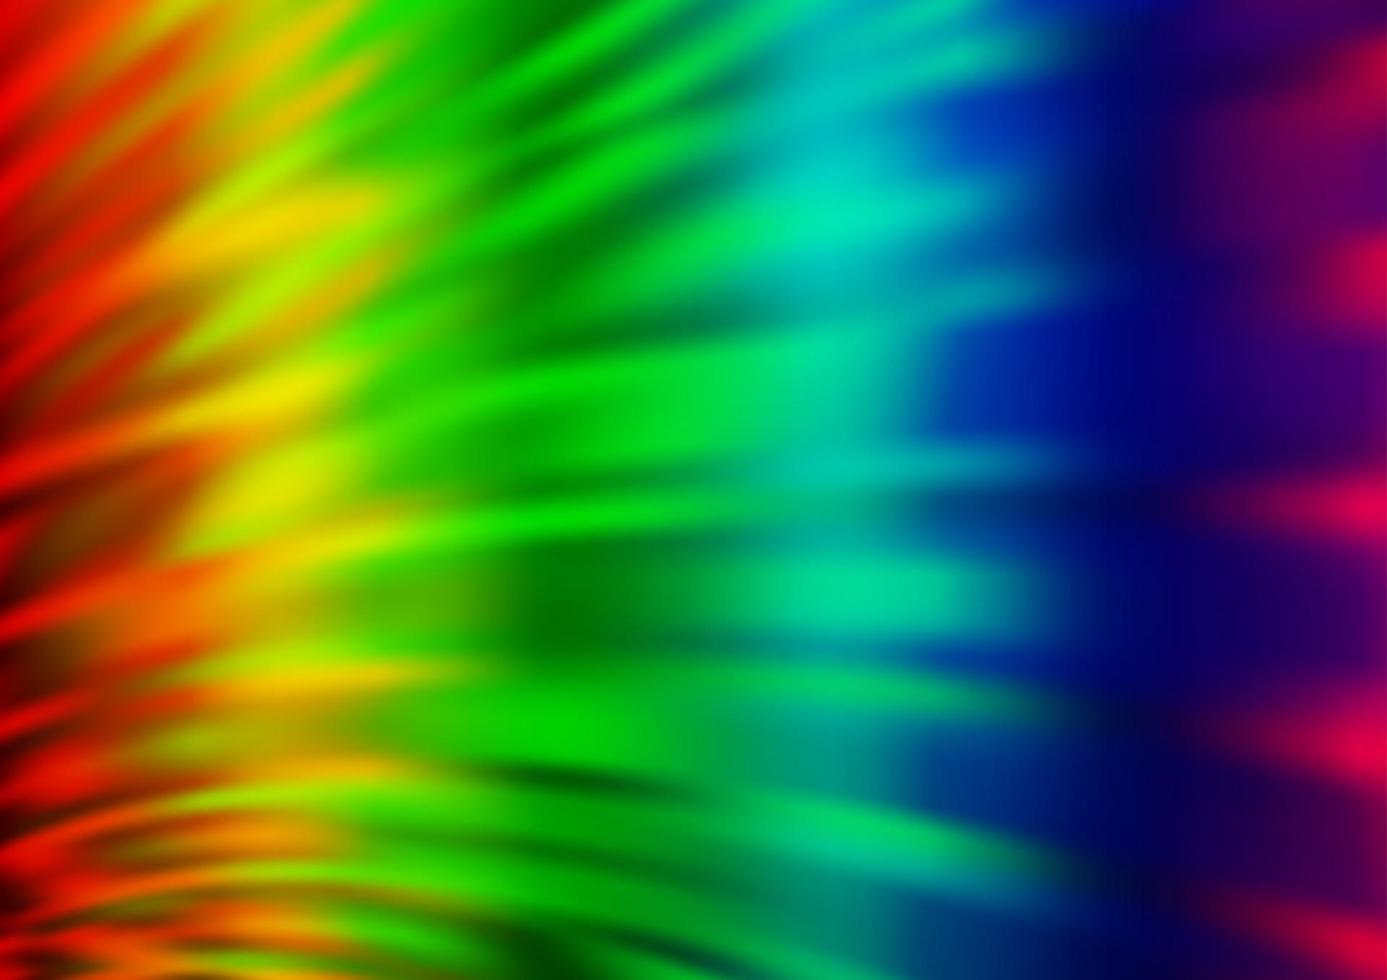 luz multicolor, padrão de bokeh brilhante vetor arco-íris.